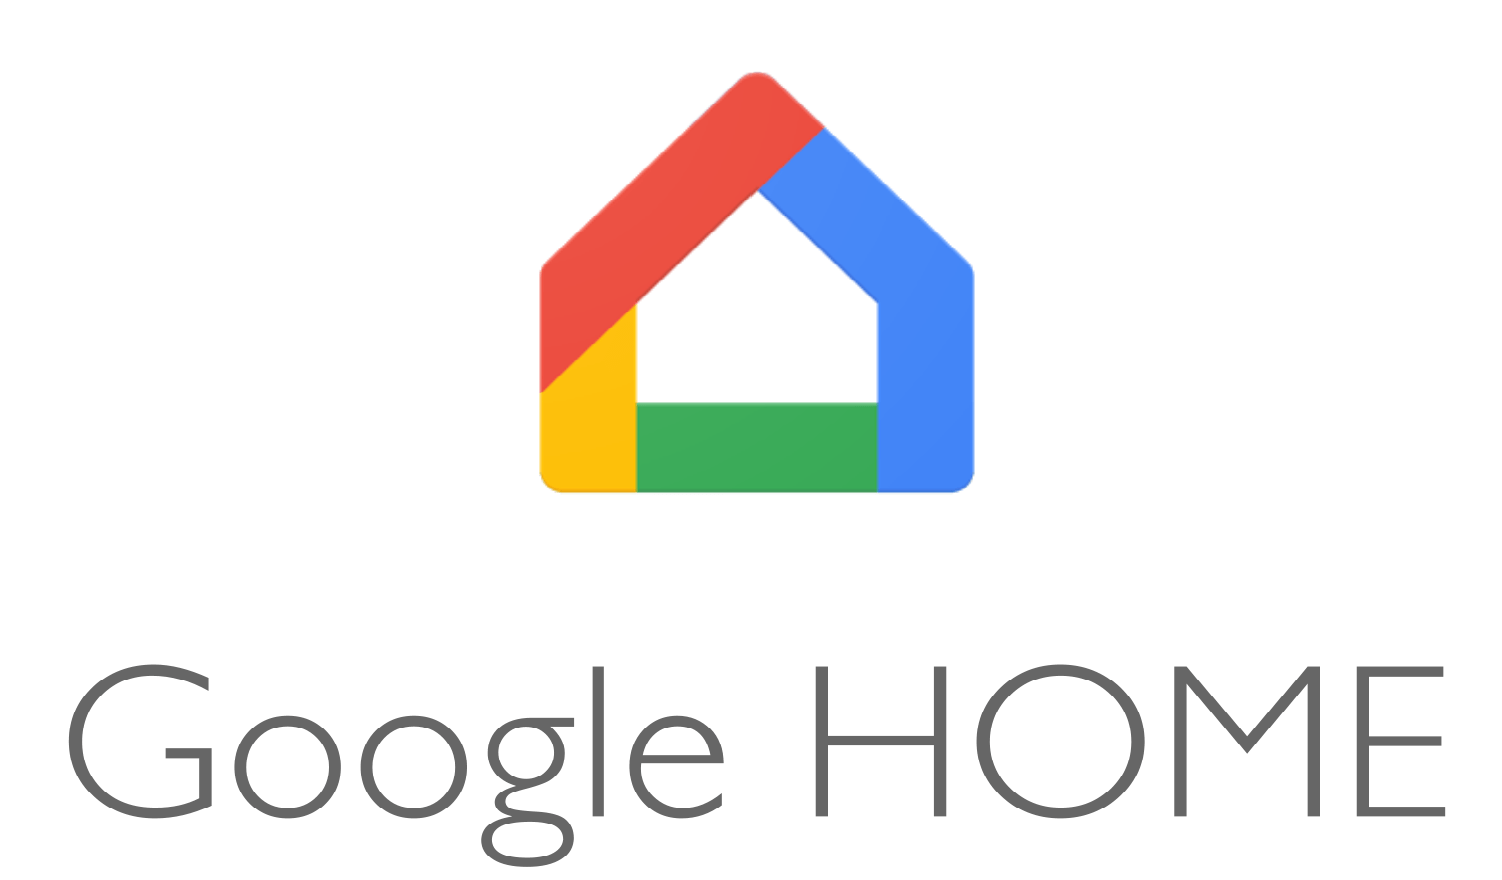 Google Home Logo - Kisspng Amazon Echo Google Home Chromebook Google Assistan Home Logo